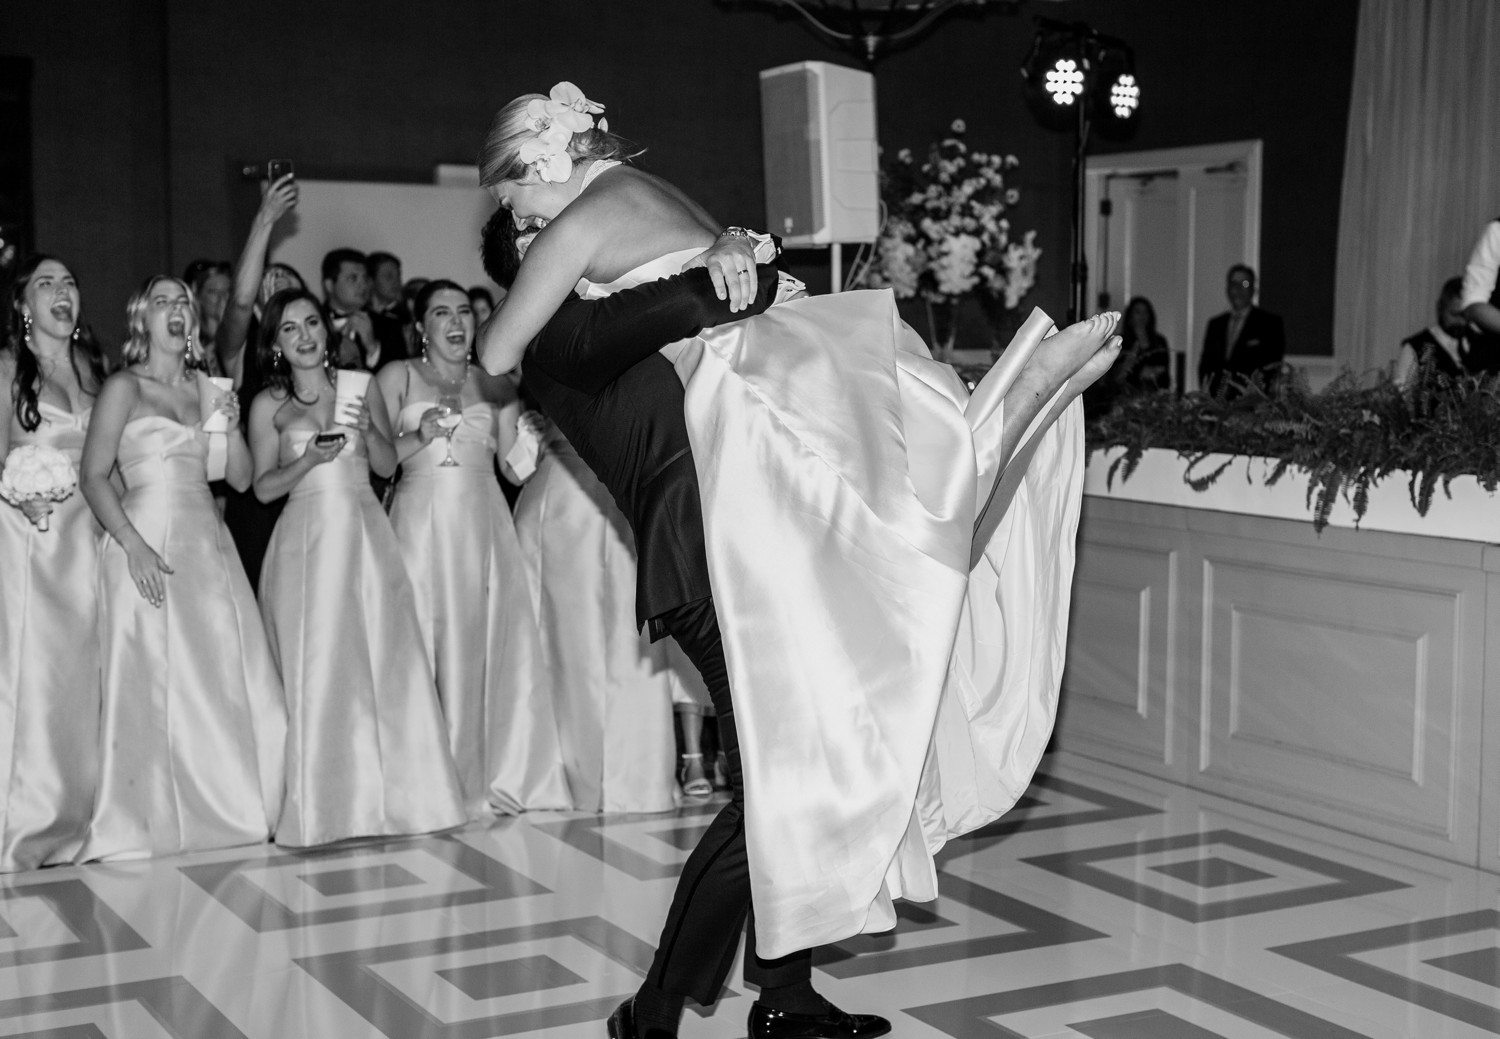 Groom picking up bride during wedding first dance.